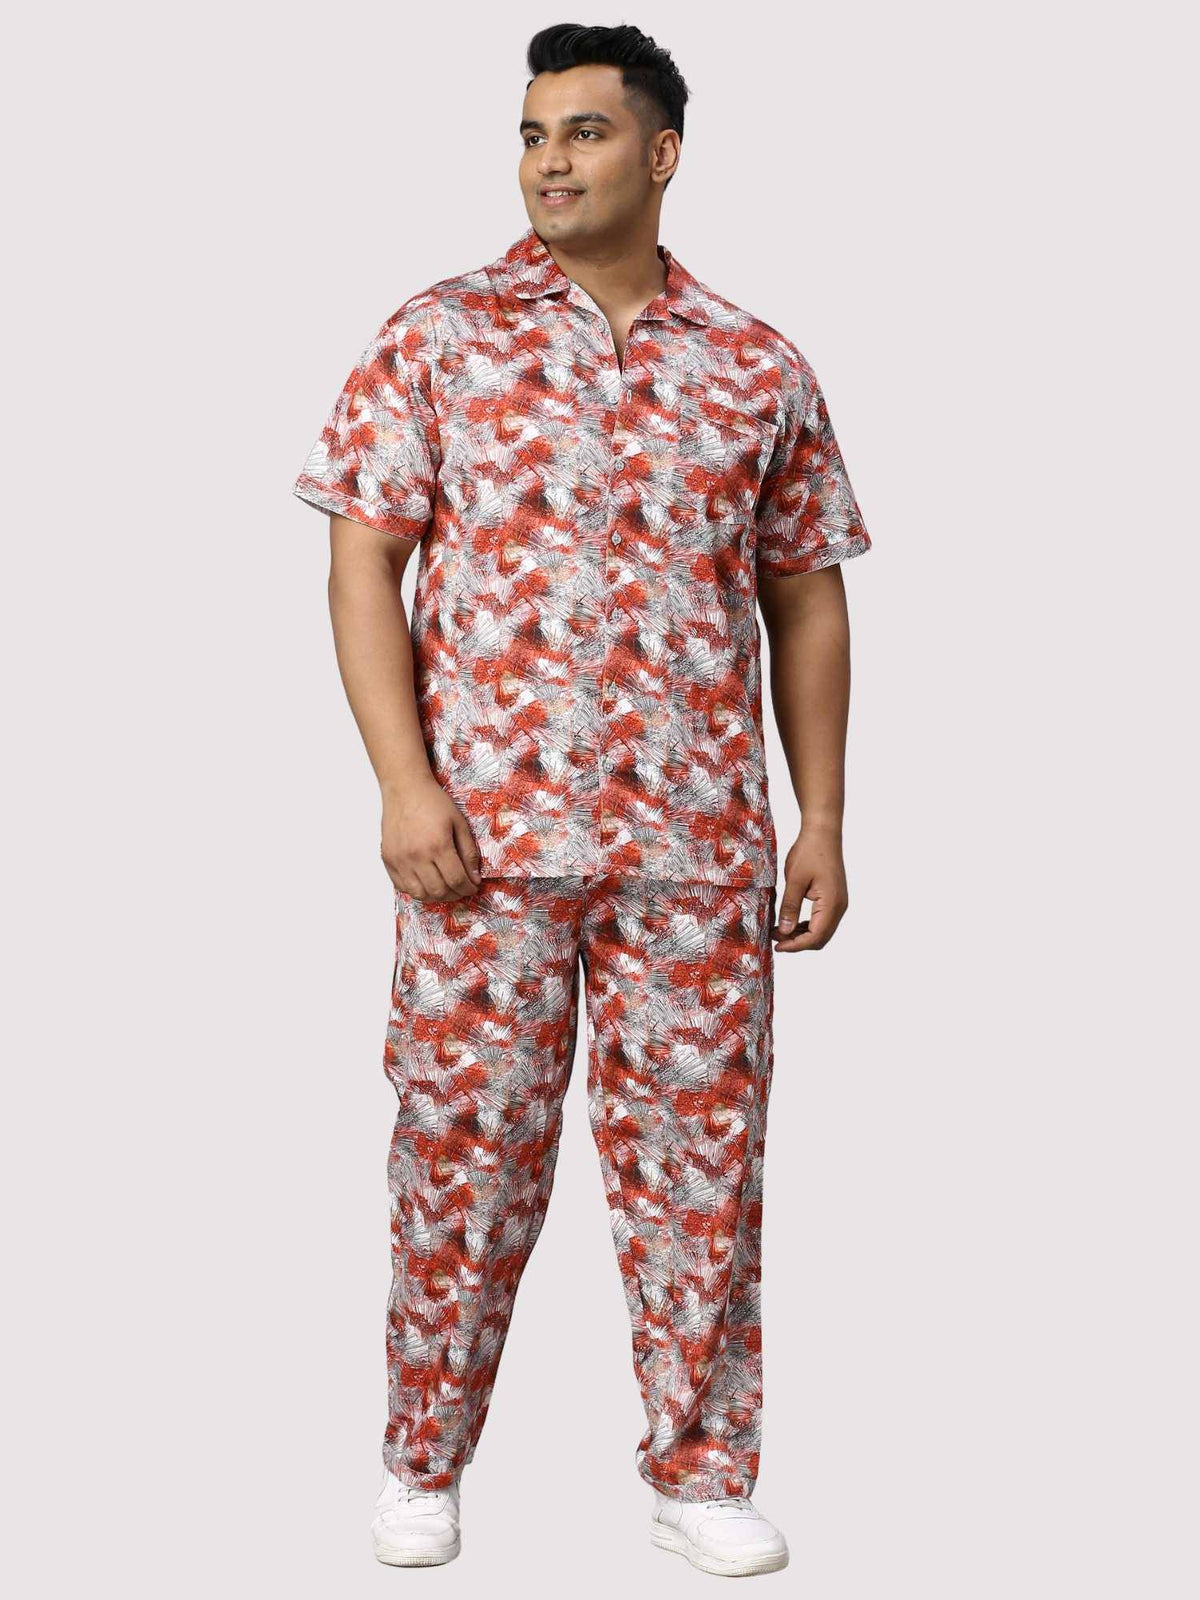 Apple Blossom Digital Printed Full Co-Ords Men's Plus Size - Guniaa Fashions